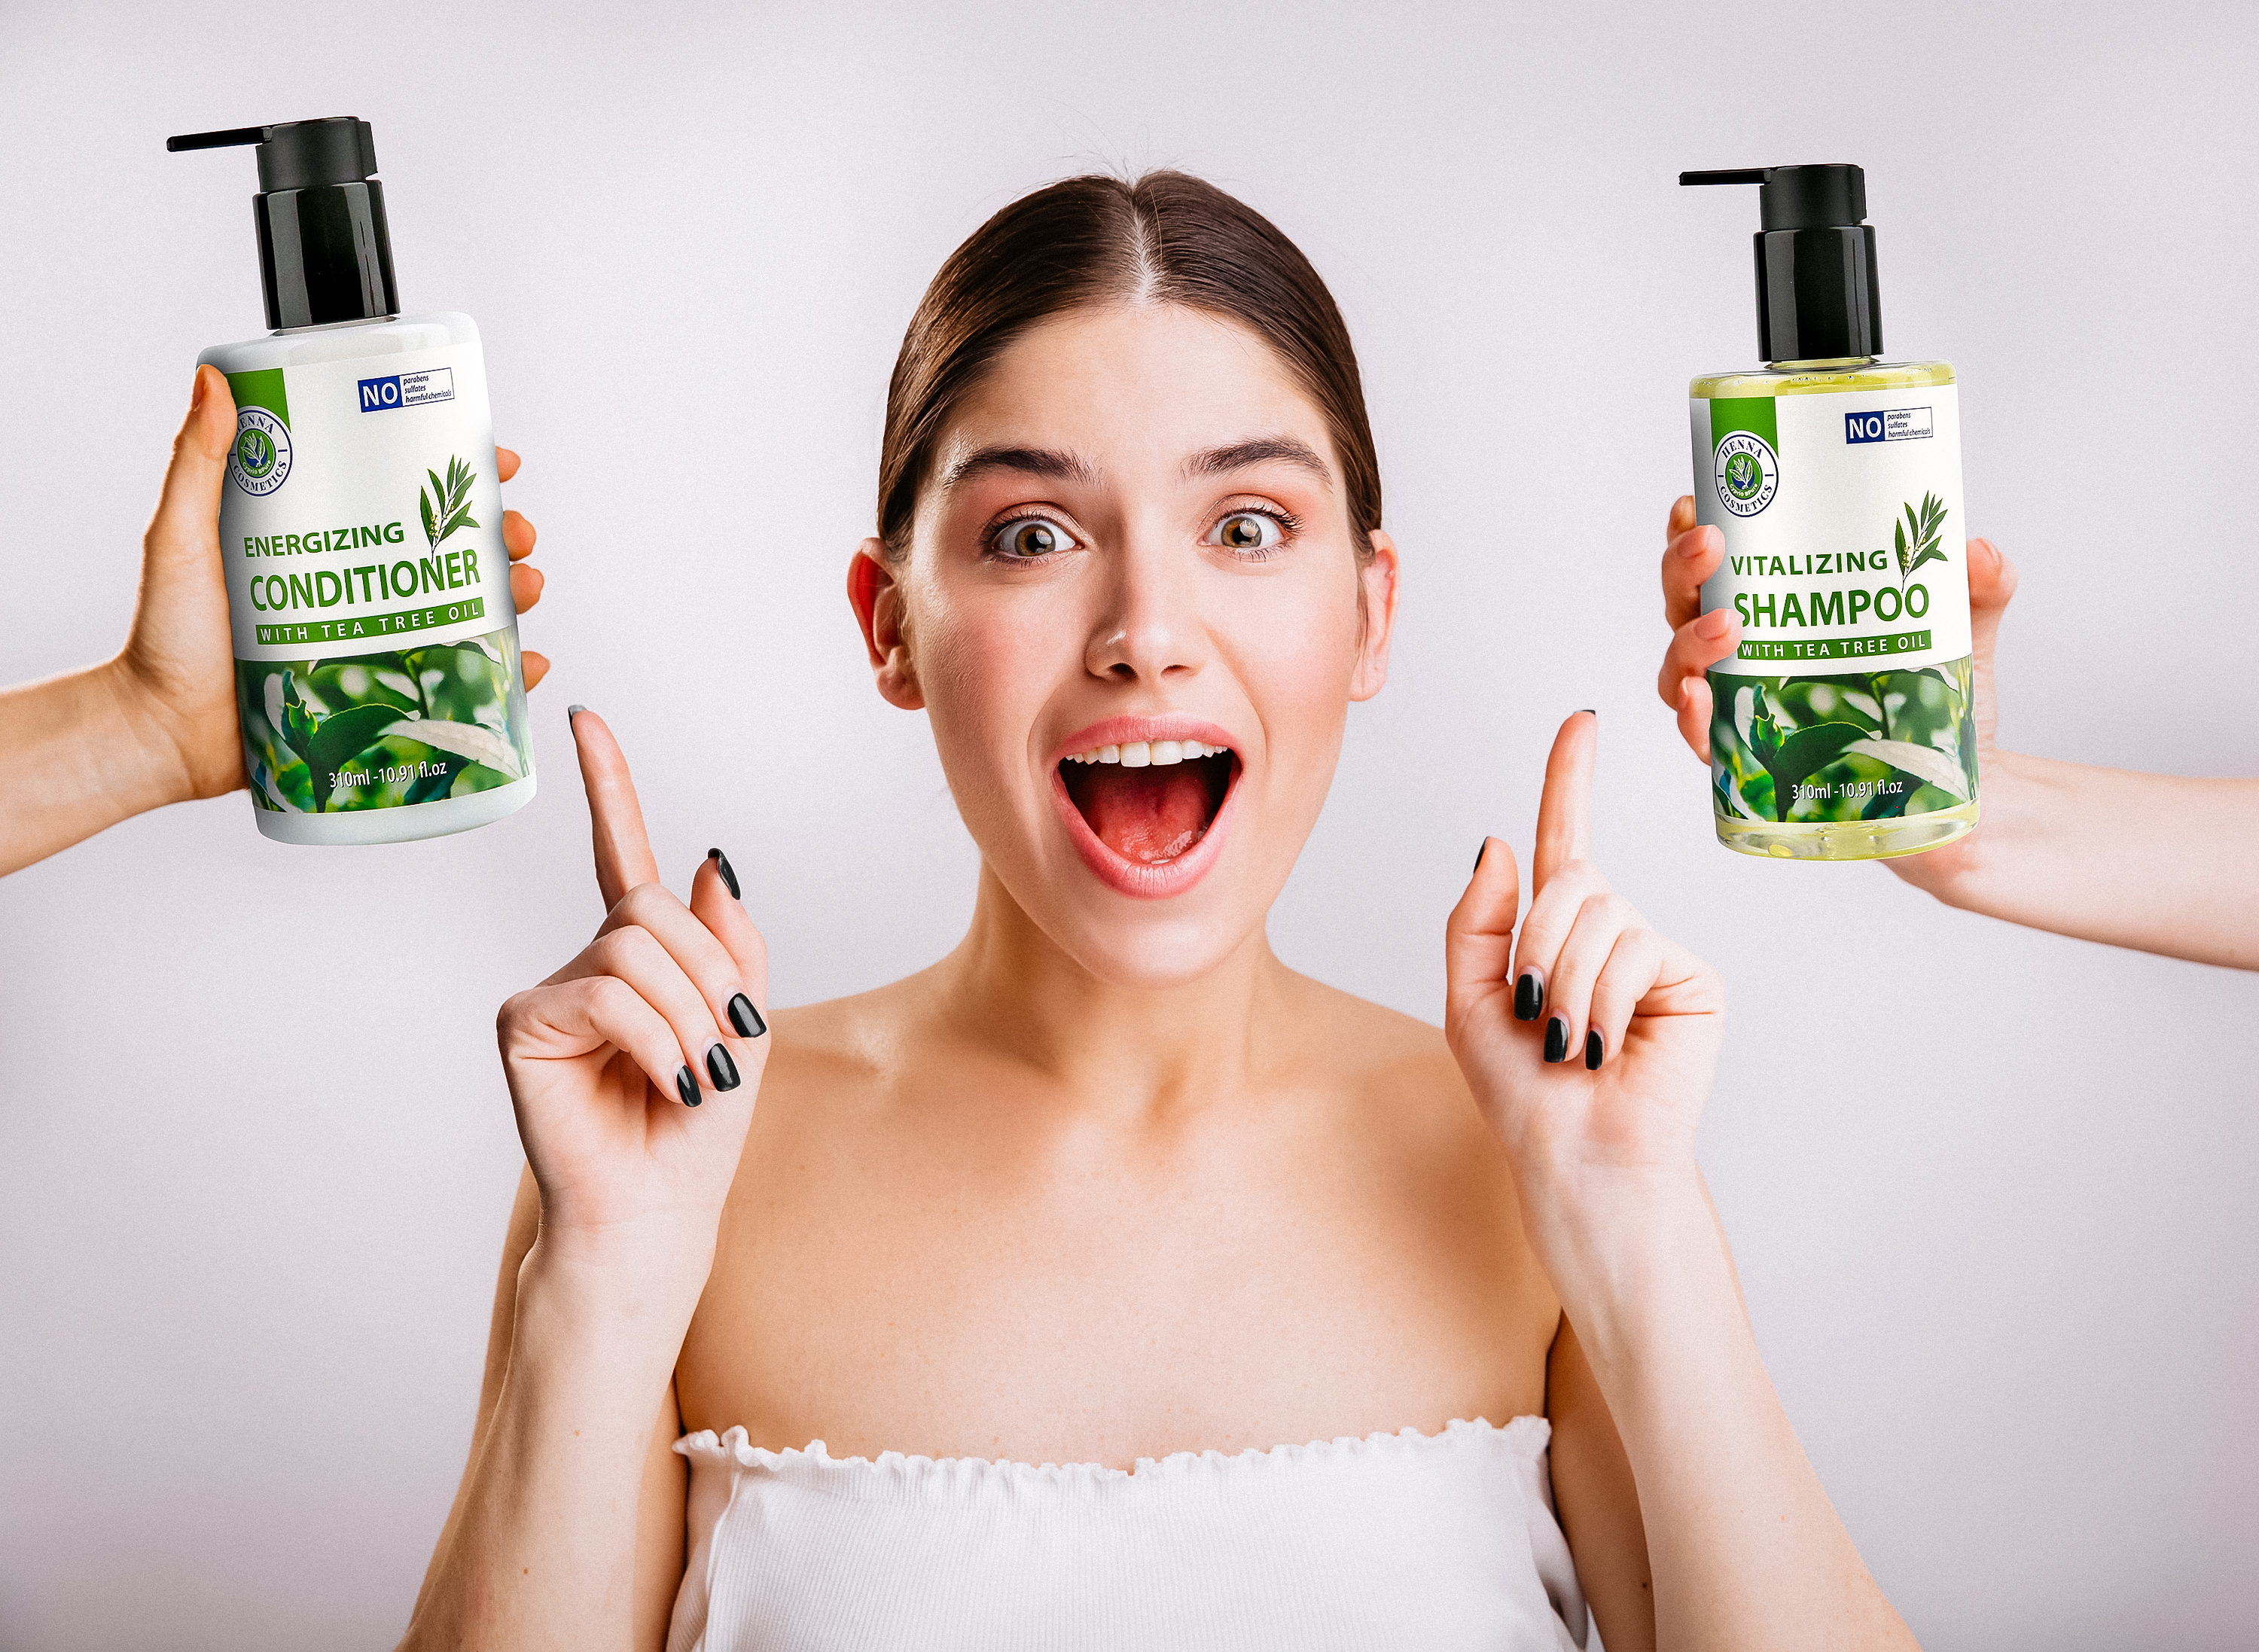 Henna Cosmetics Tea Tree Oil Shampoo / Conditioner Set - Sulfate Paraben Free 10.4 FL oz. - image 2 of 7